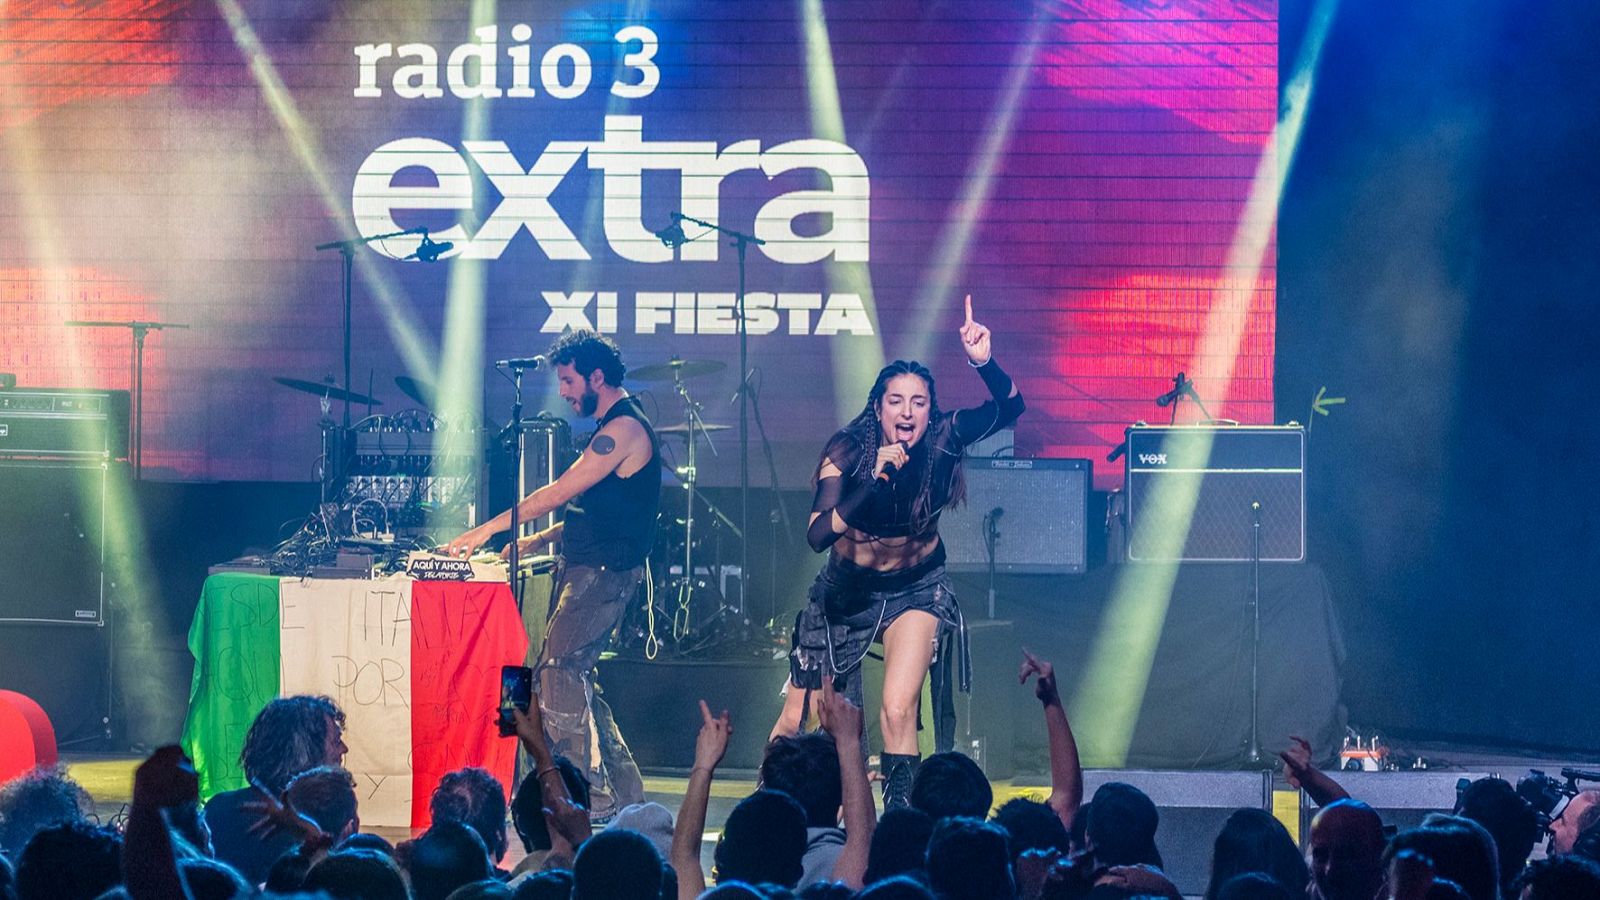 Fiesta de Radio 3 Extra - Delaporte